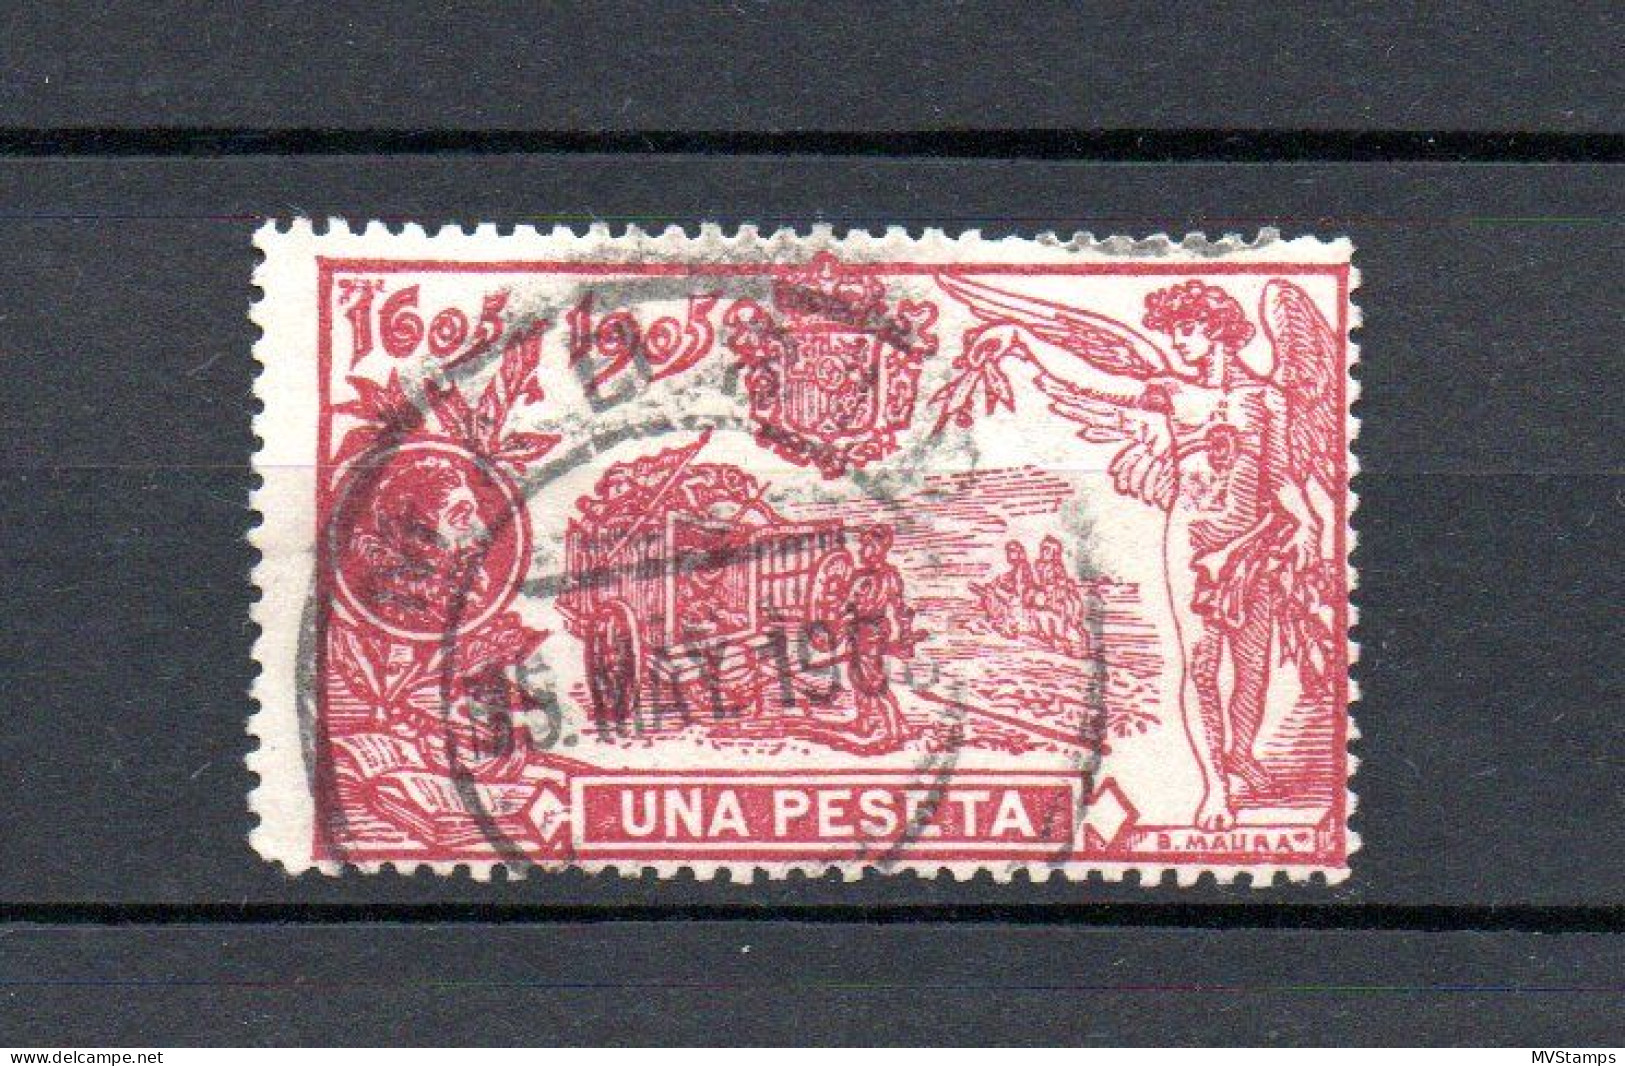 Spain 1905 Old 1 Peseta Don Quijote Stamps (Michel 227) Nice Used - Usati